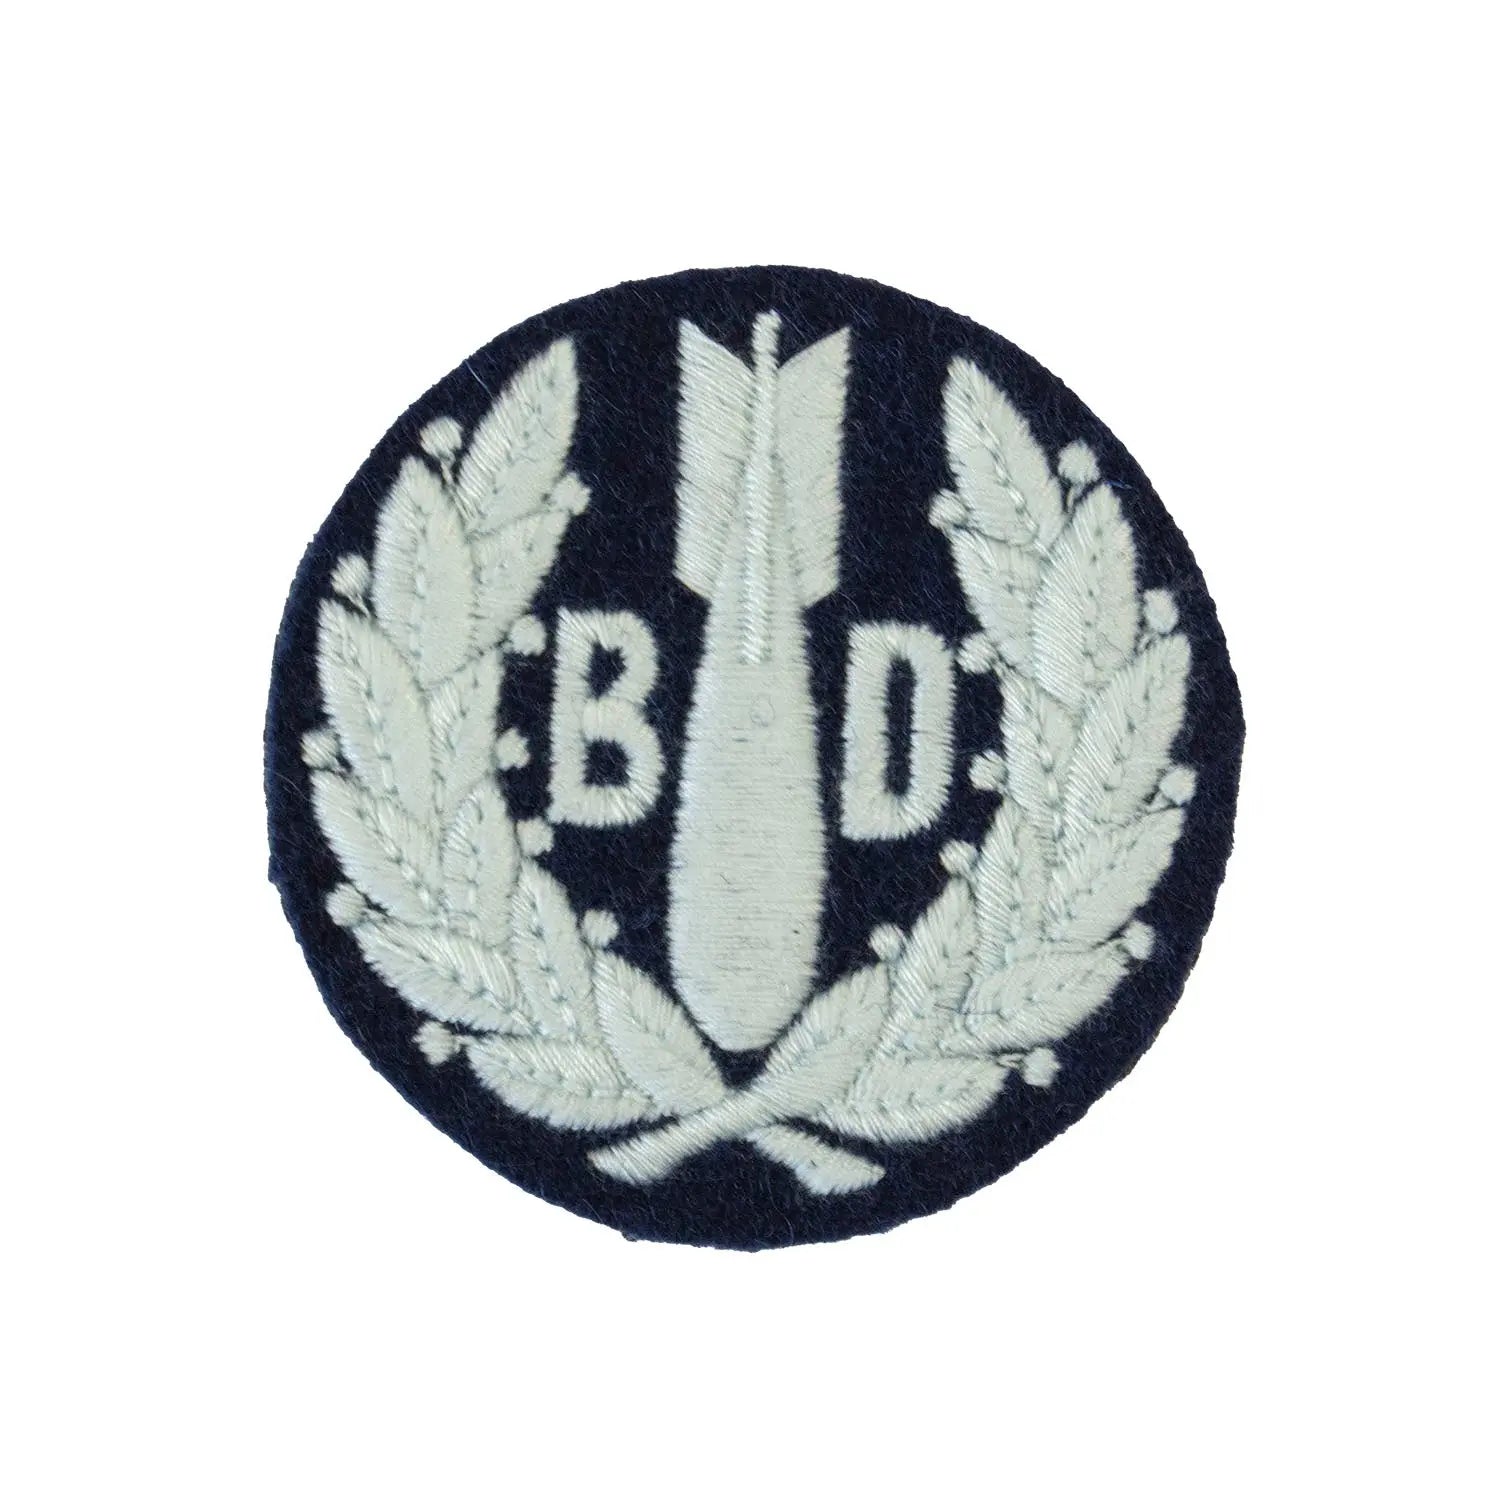 Bomb Disposal Royal Air Force (RAF) Qualification Badge wyedean